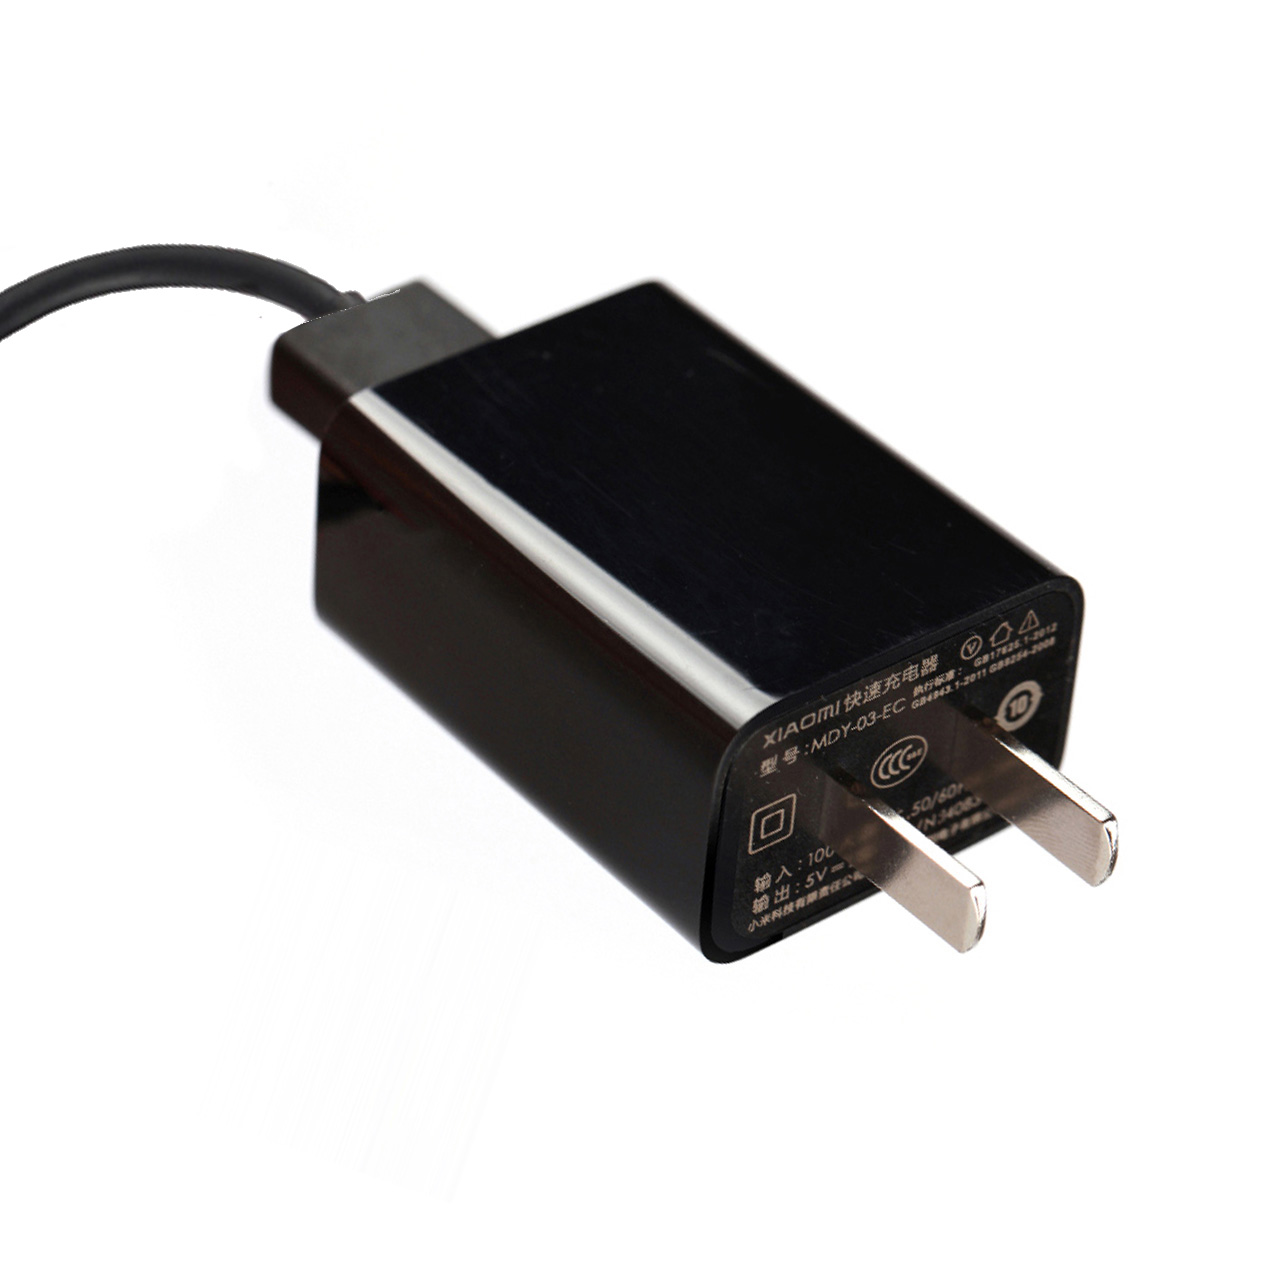 شارژر دیواری شیائومی مدل MDY-03-EC به همراه کابل Micro USB